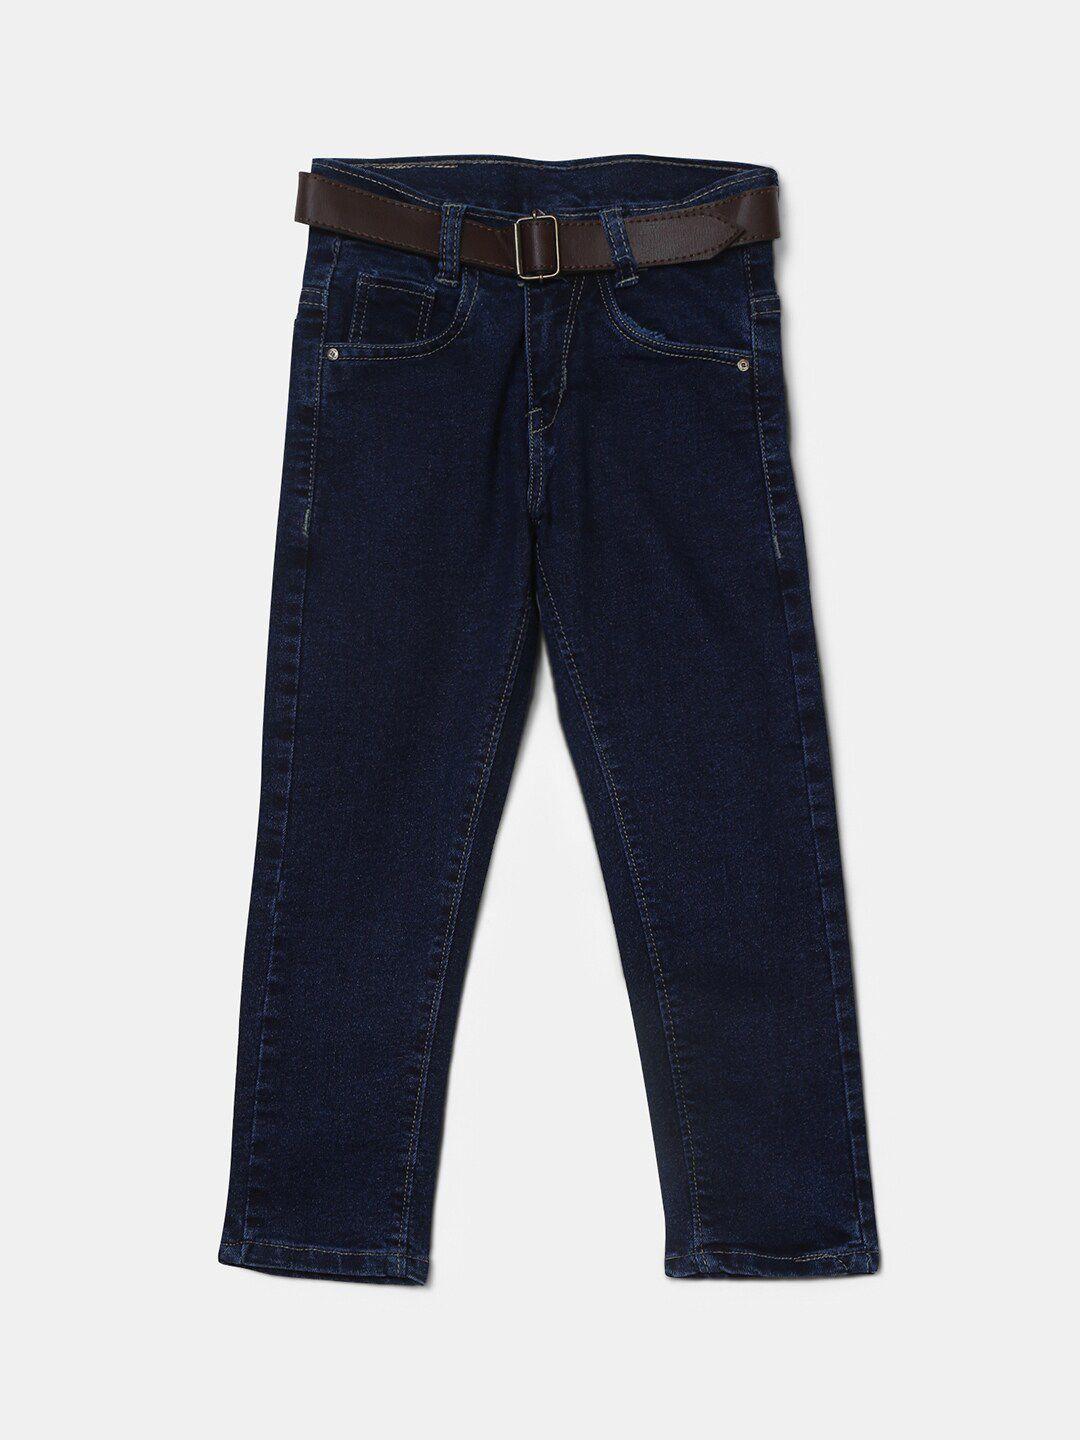 v-mart boys blue jeans